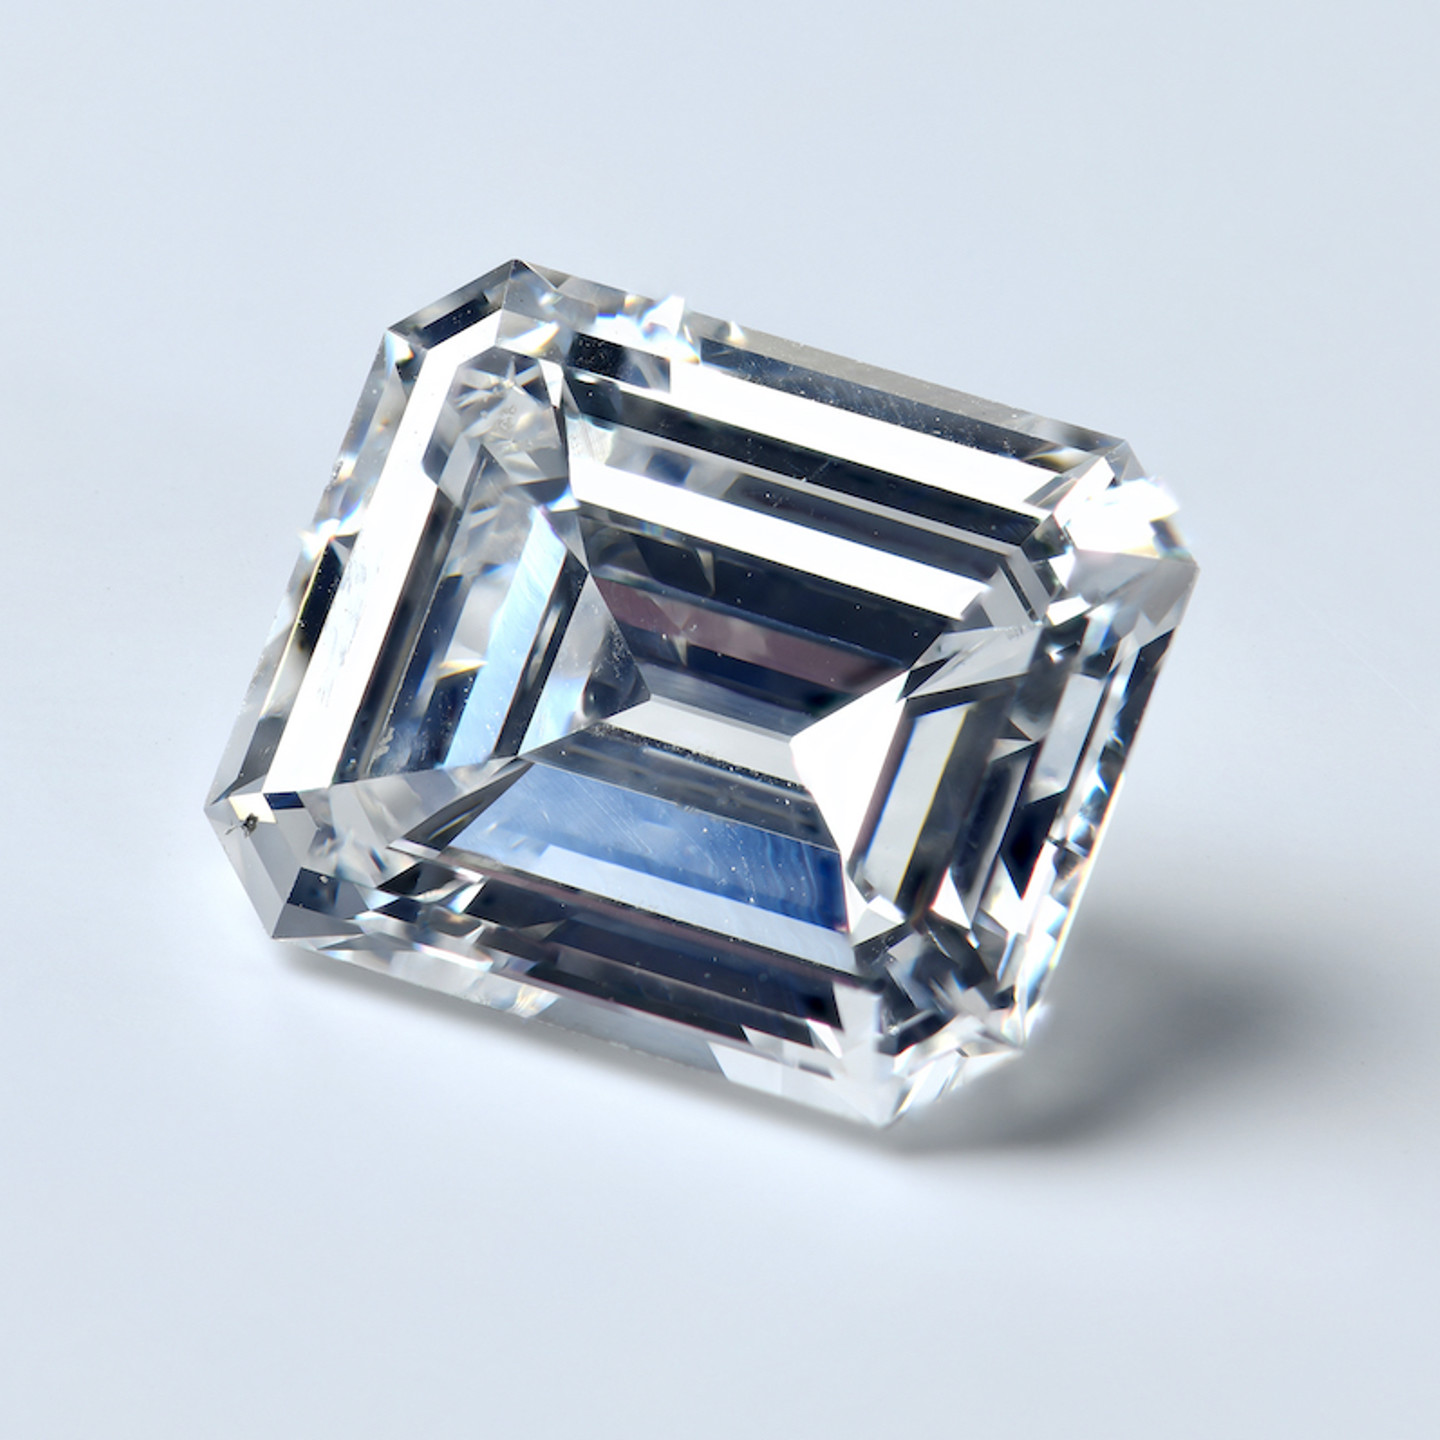 8.2Ct Emerald Cut Diamond. Sold For £95,000